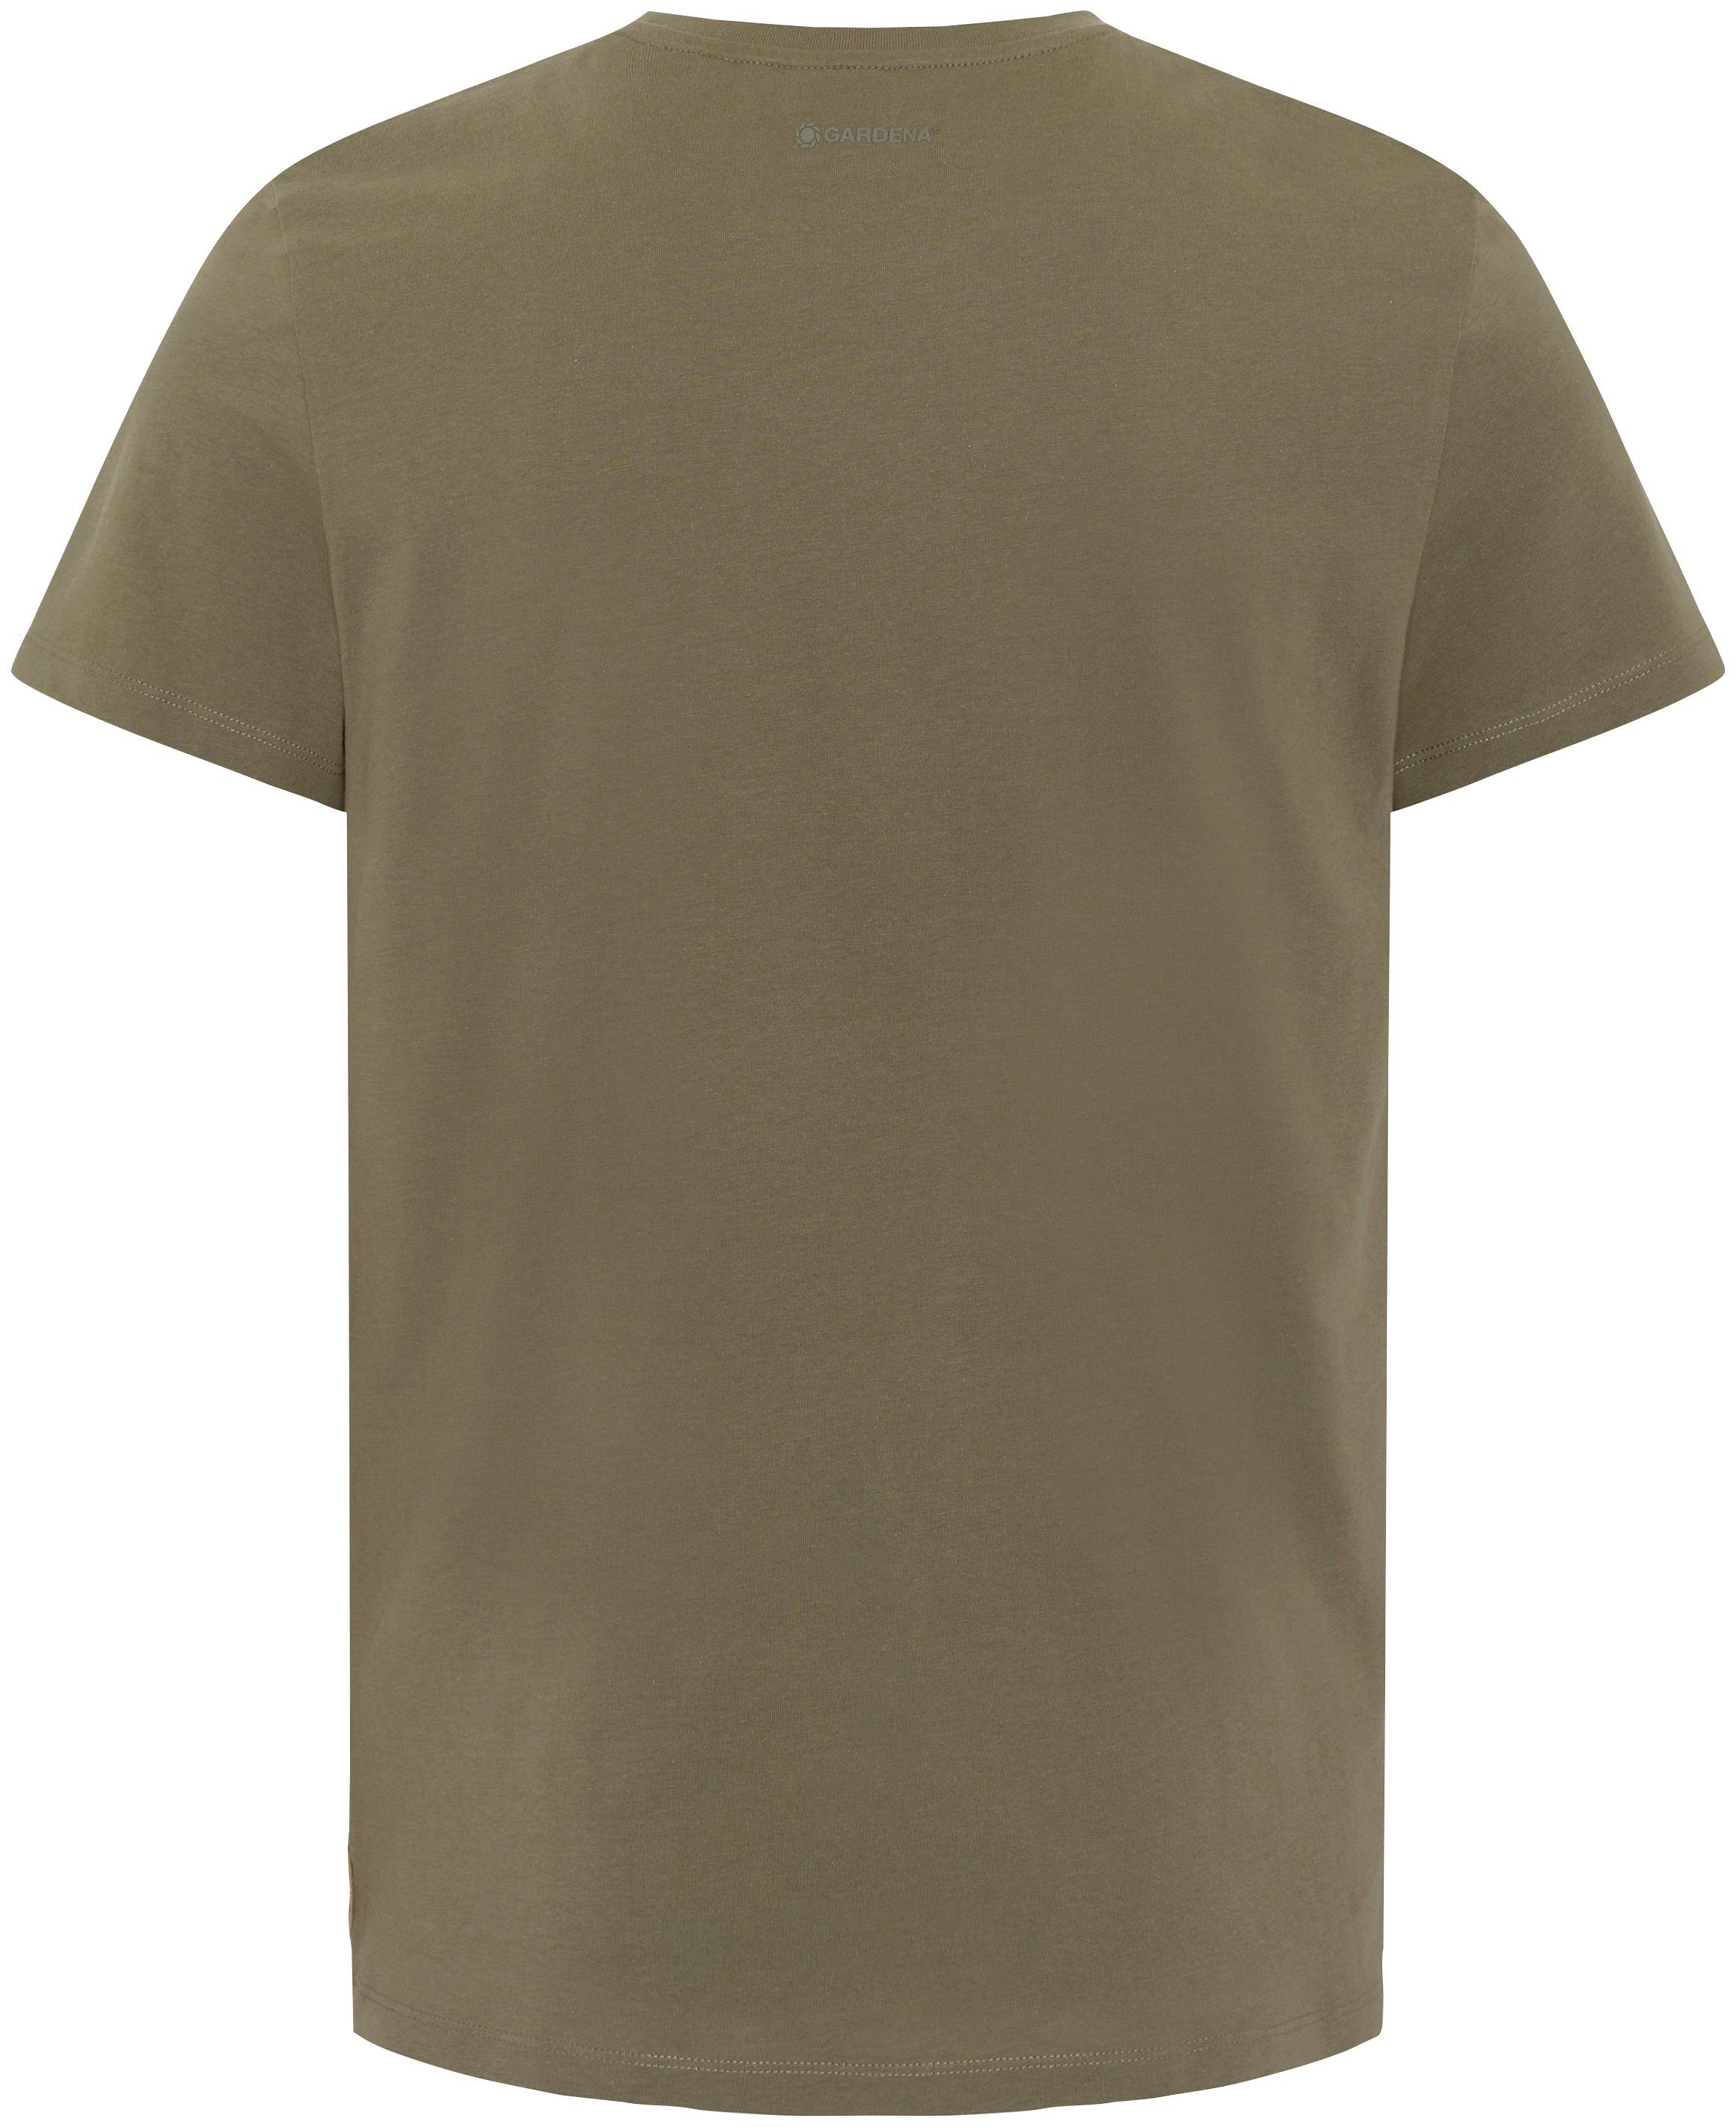 Dusty GARDENA T-Shirt Olive